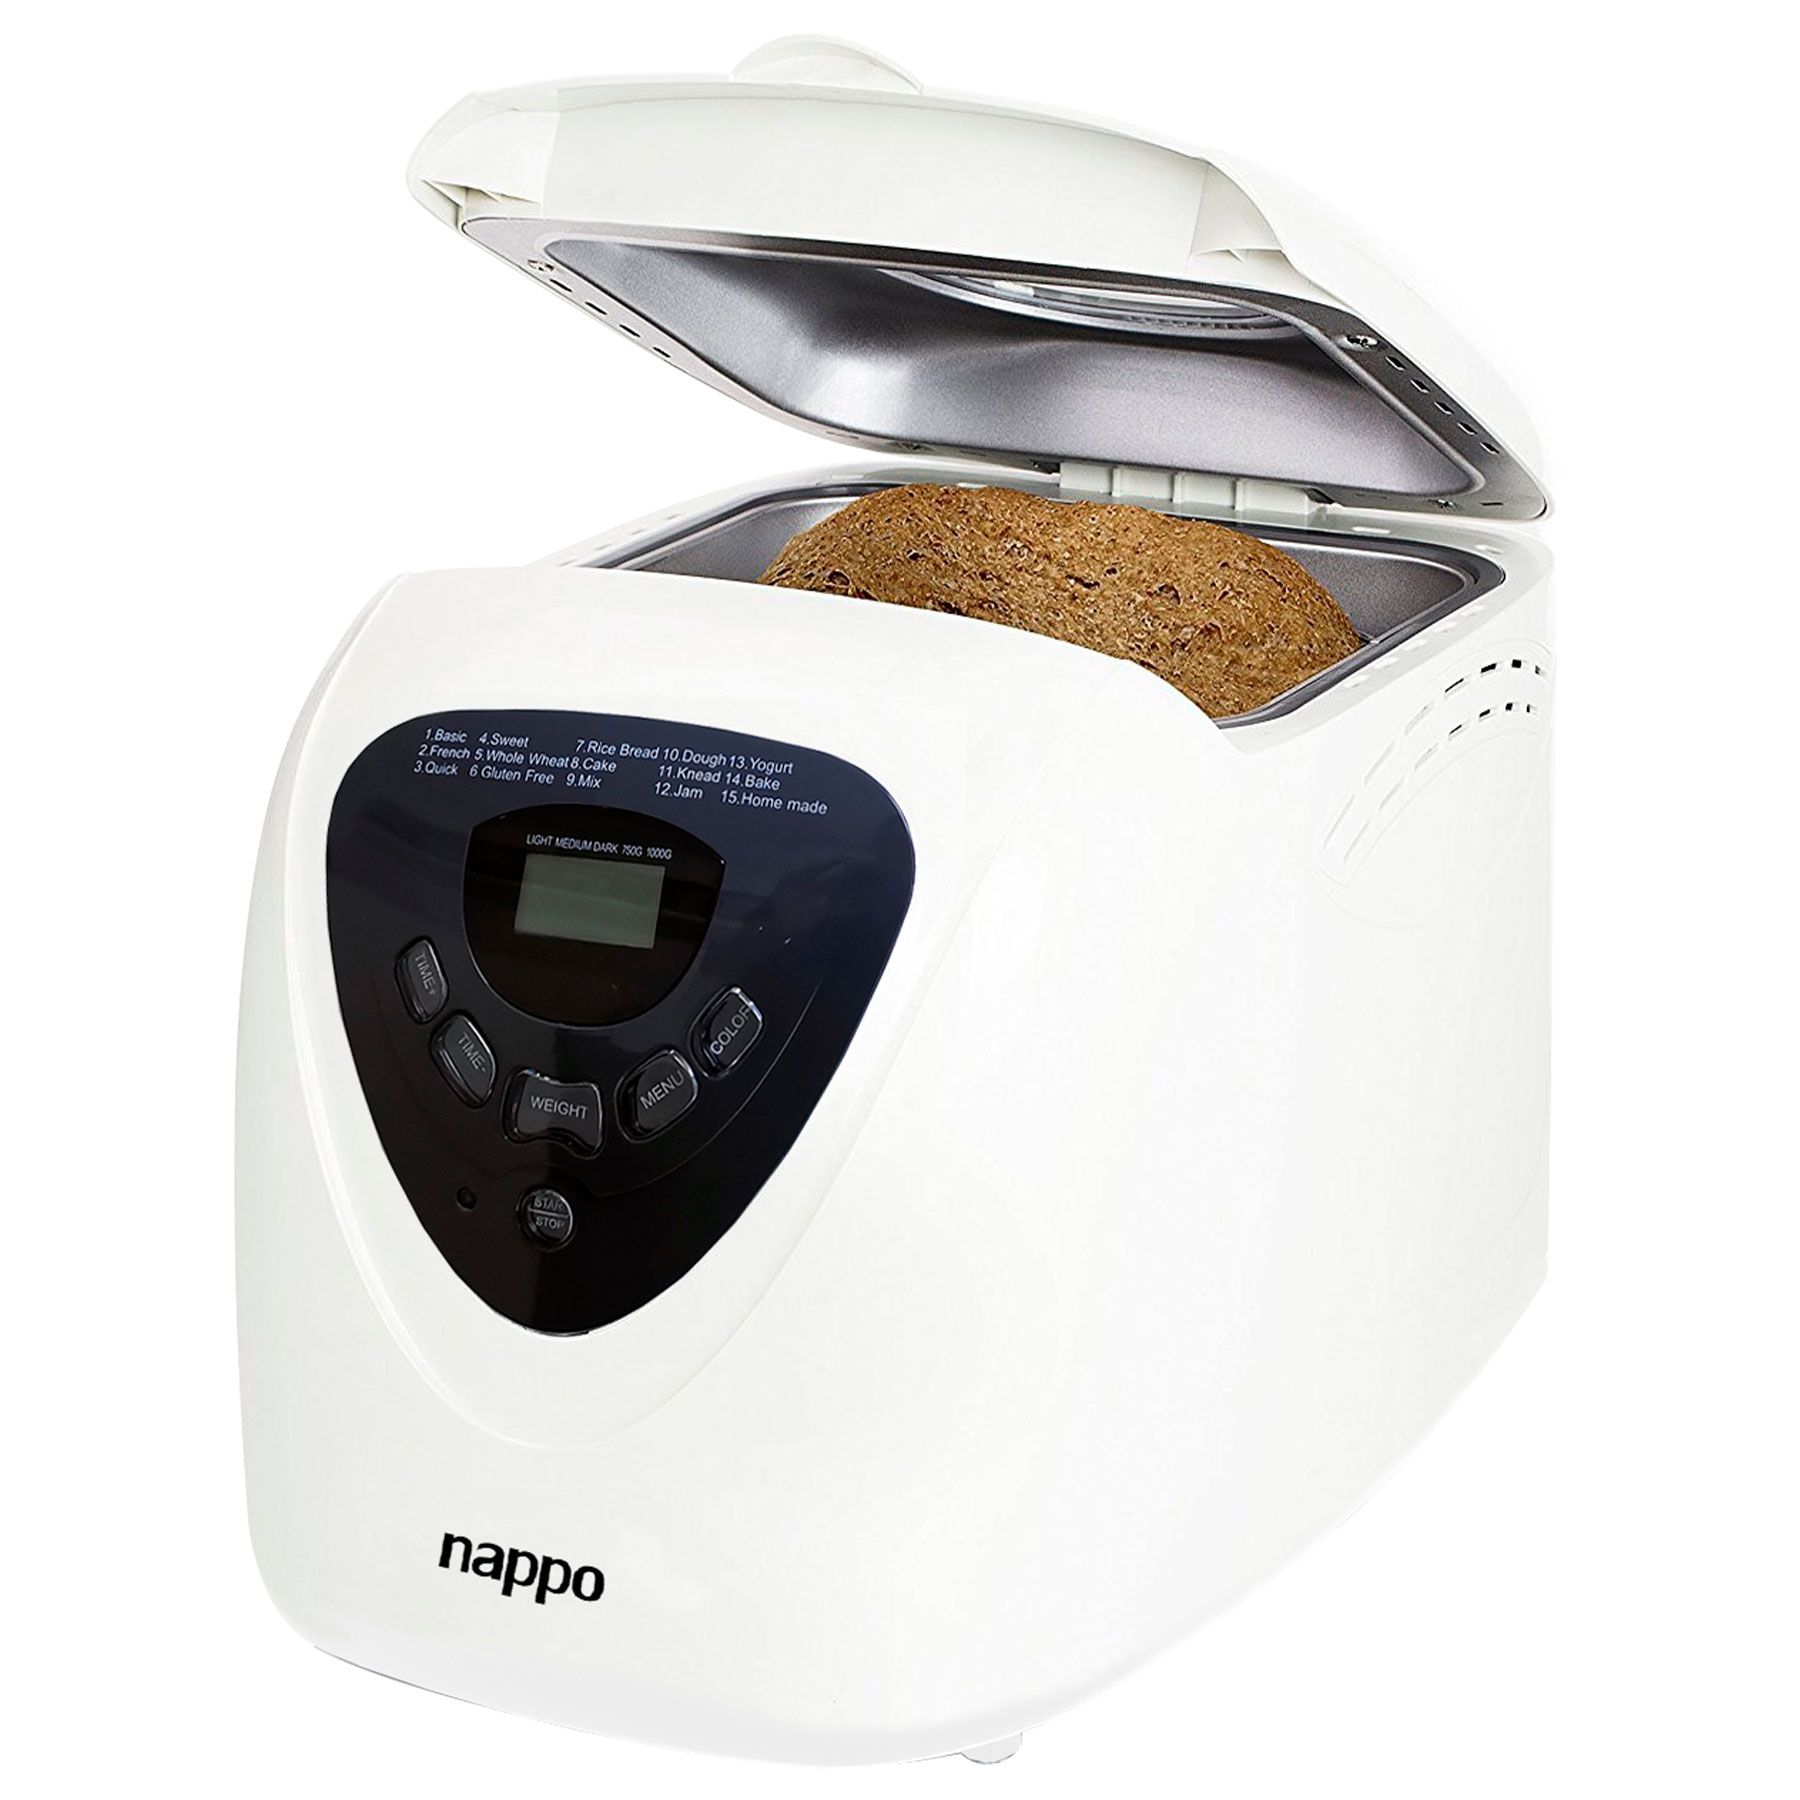 Maquina para hacer pan Nappo 1kg 700w LCD con 15 programas